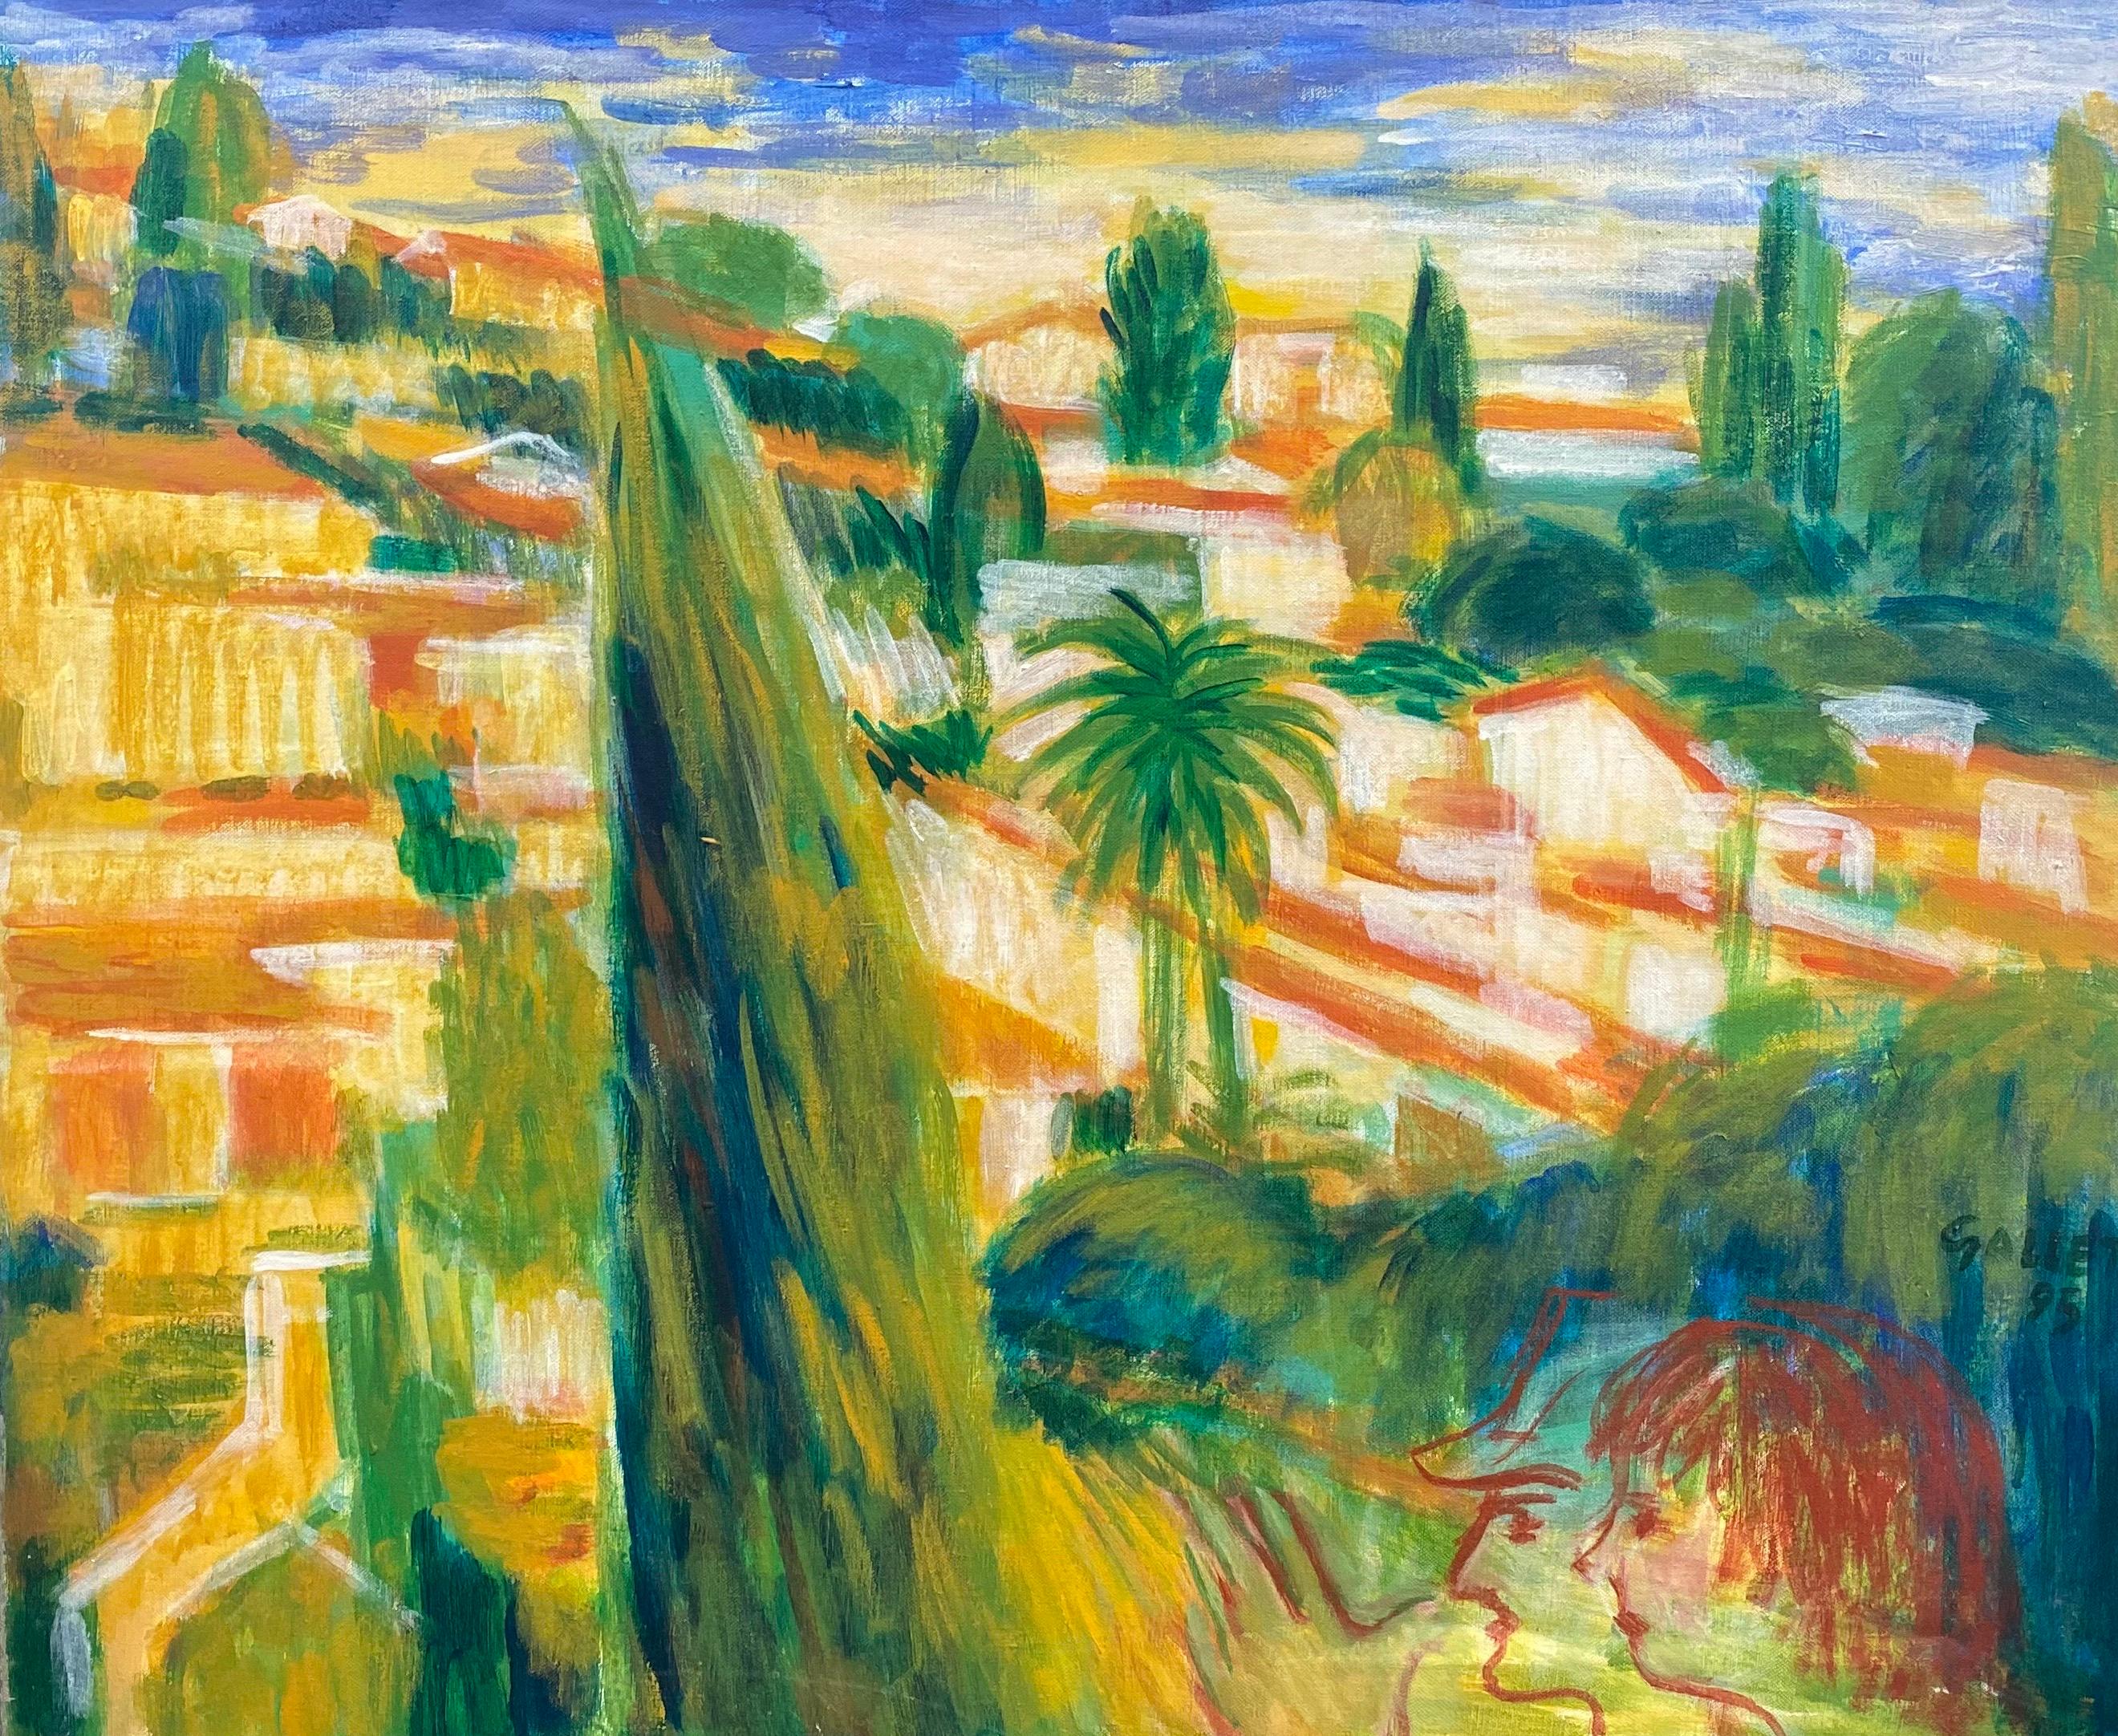 Jostne Gallet Landscape Painting - St. Paul de Vence South of France, Large French Oil Painting Bright Colors